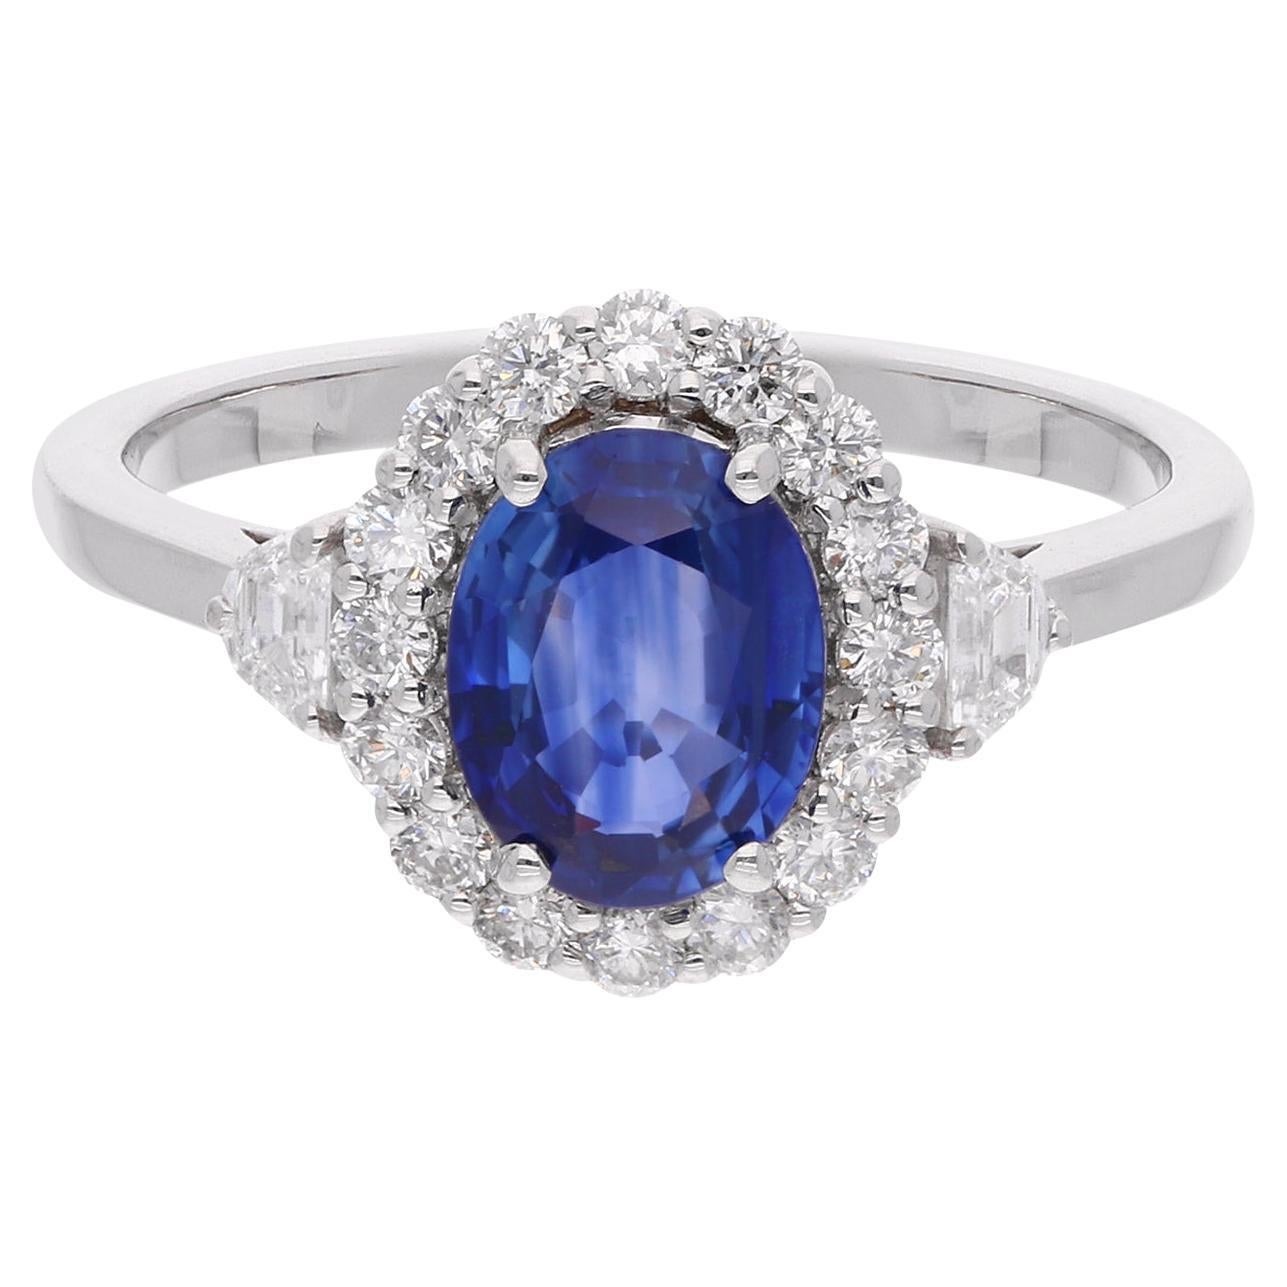 Oval Blue Sapphire Gemstone Cocktail Ring Diamond 14 Karat White Gold Jewelry For Sale